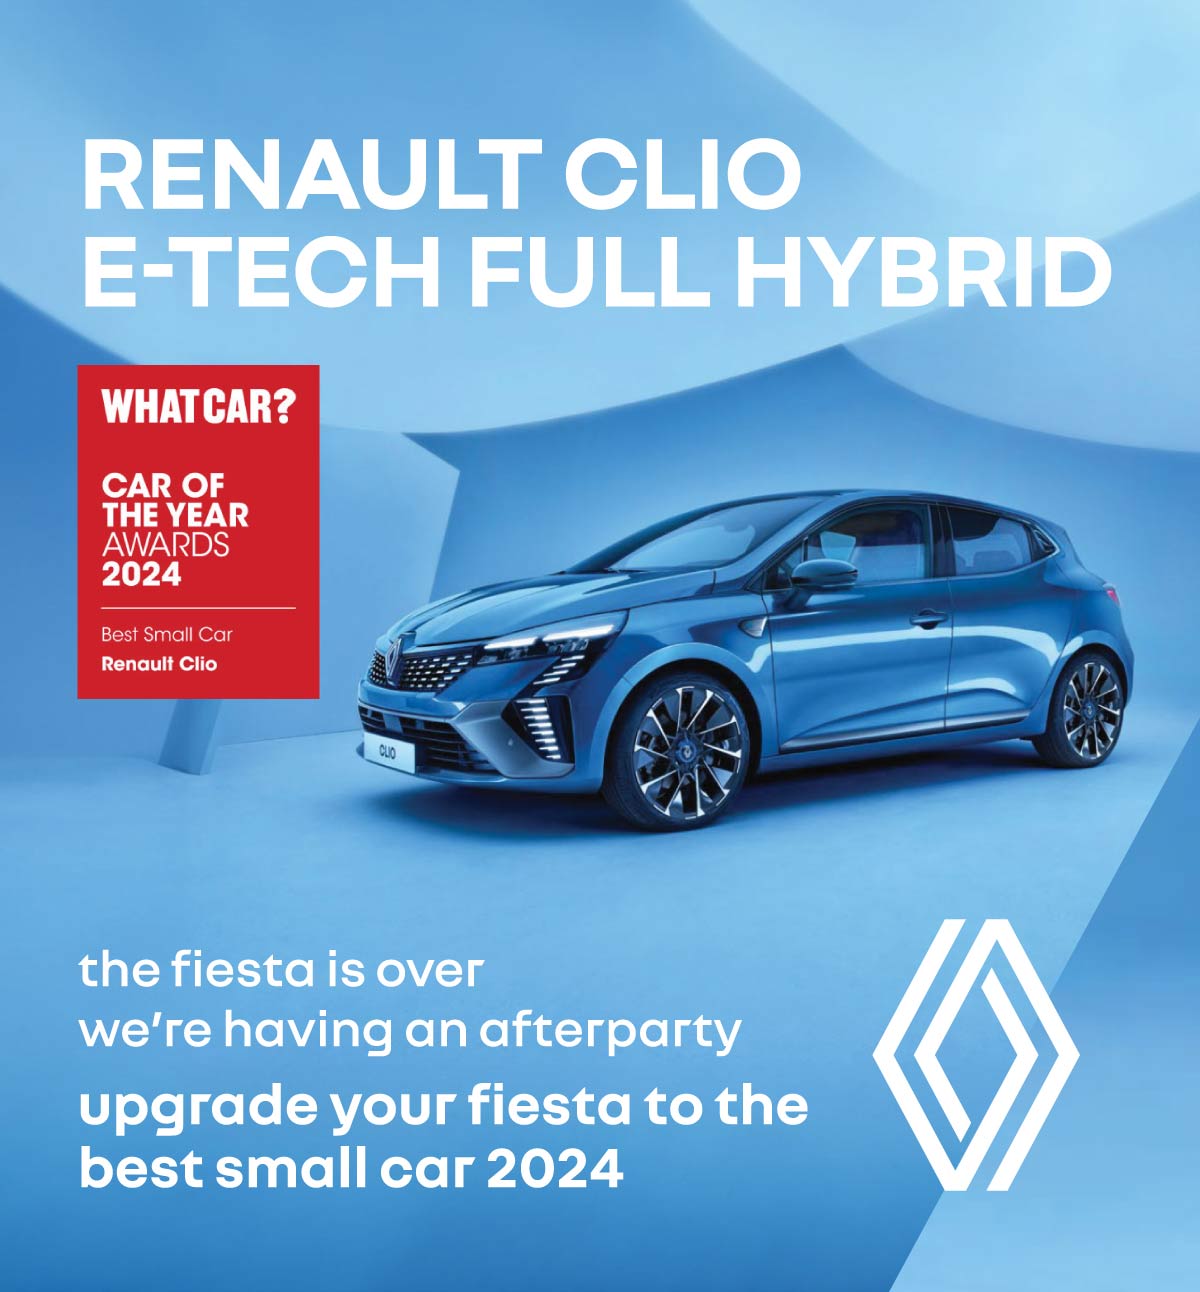 Renault Clio x Fiesta